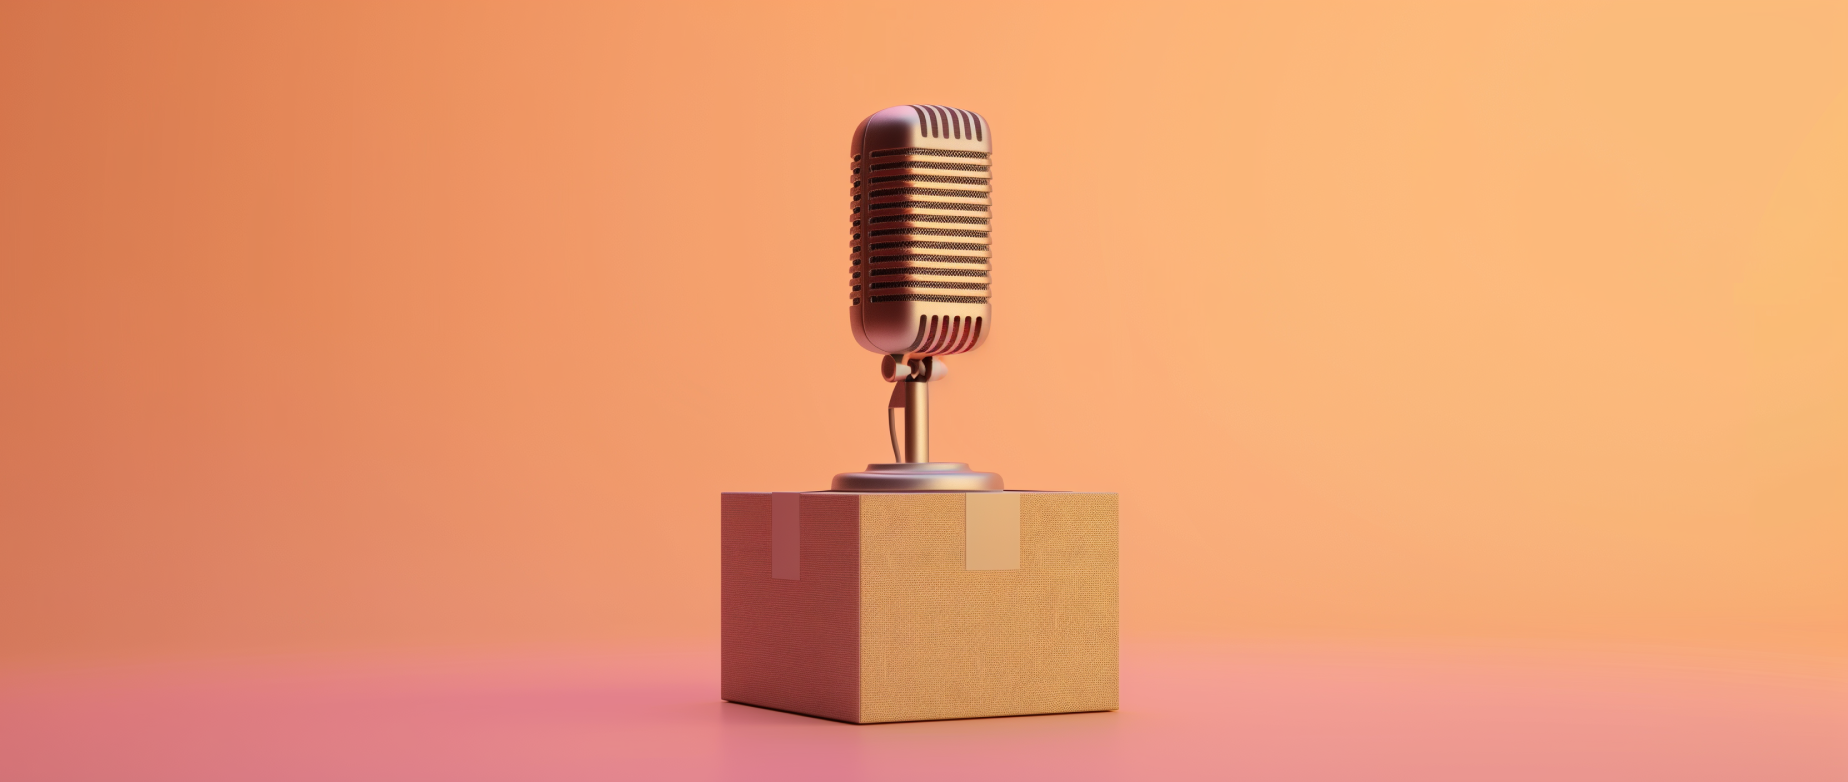 A microphone on a cardboard box on a light orange background.